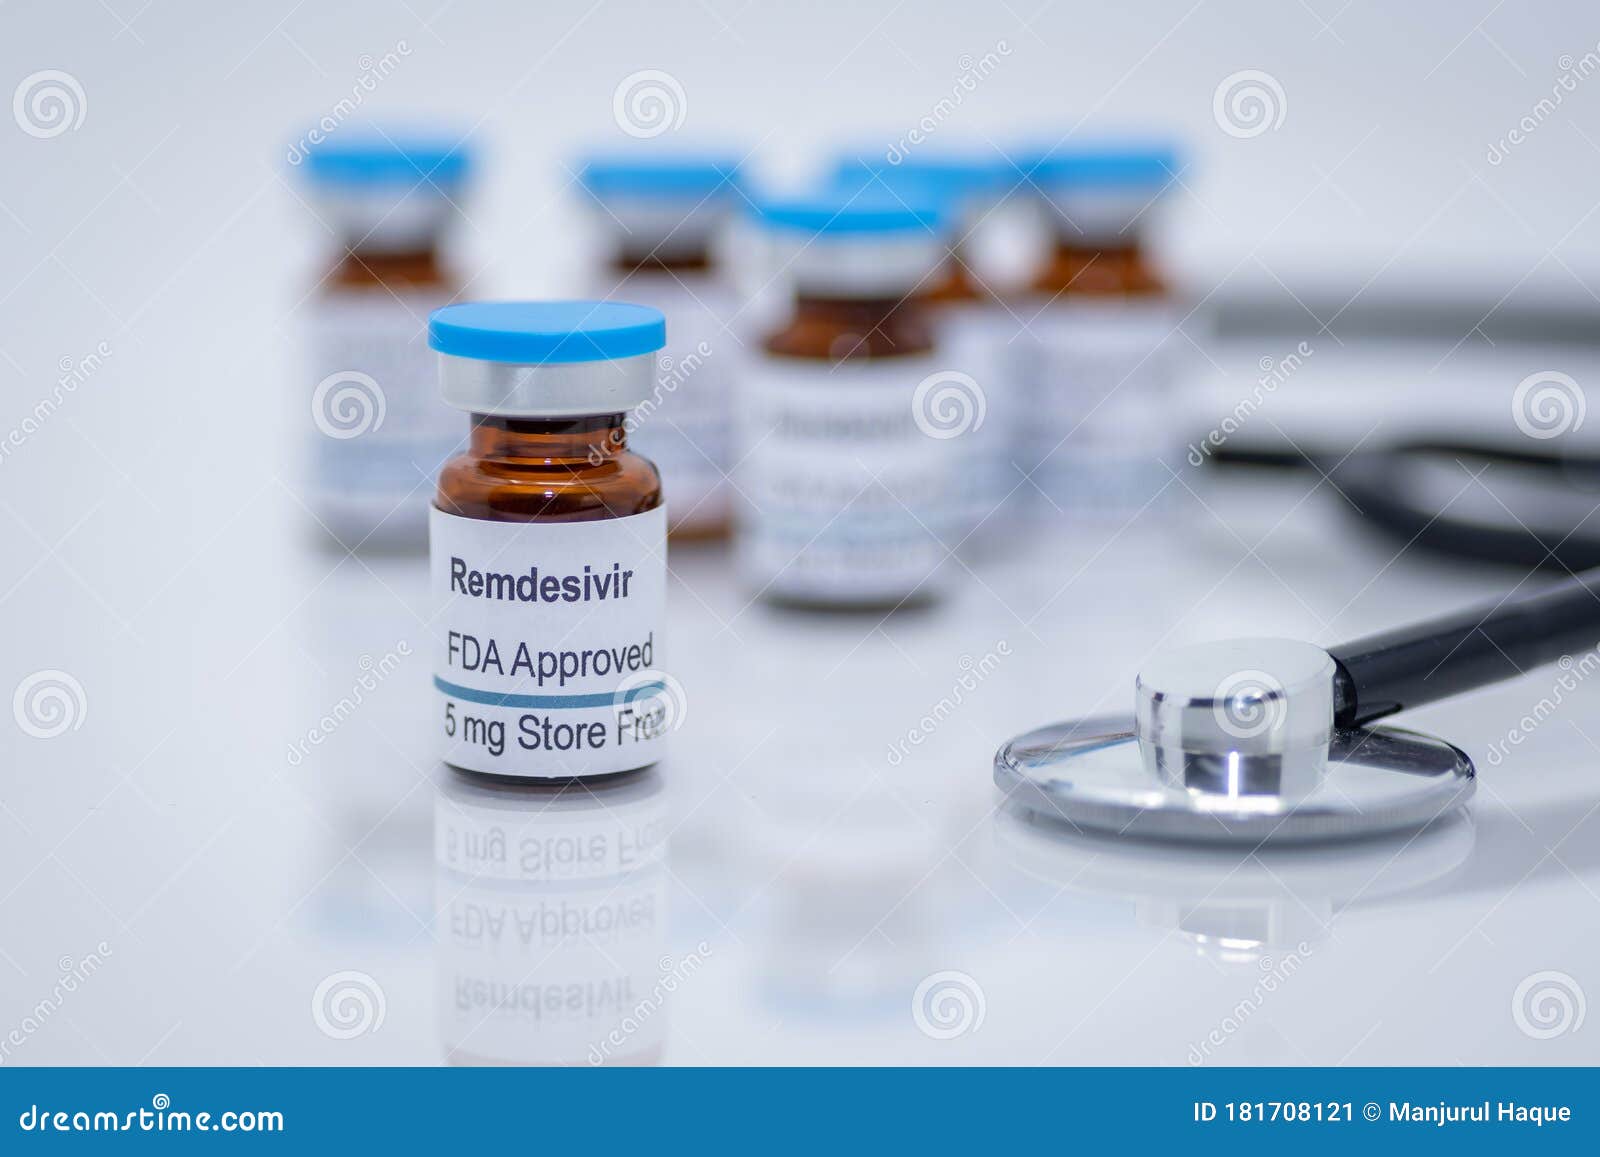 antiviral fda approved drug remdesivir for treatment of novel coronavirus covid-19